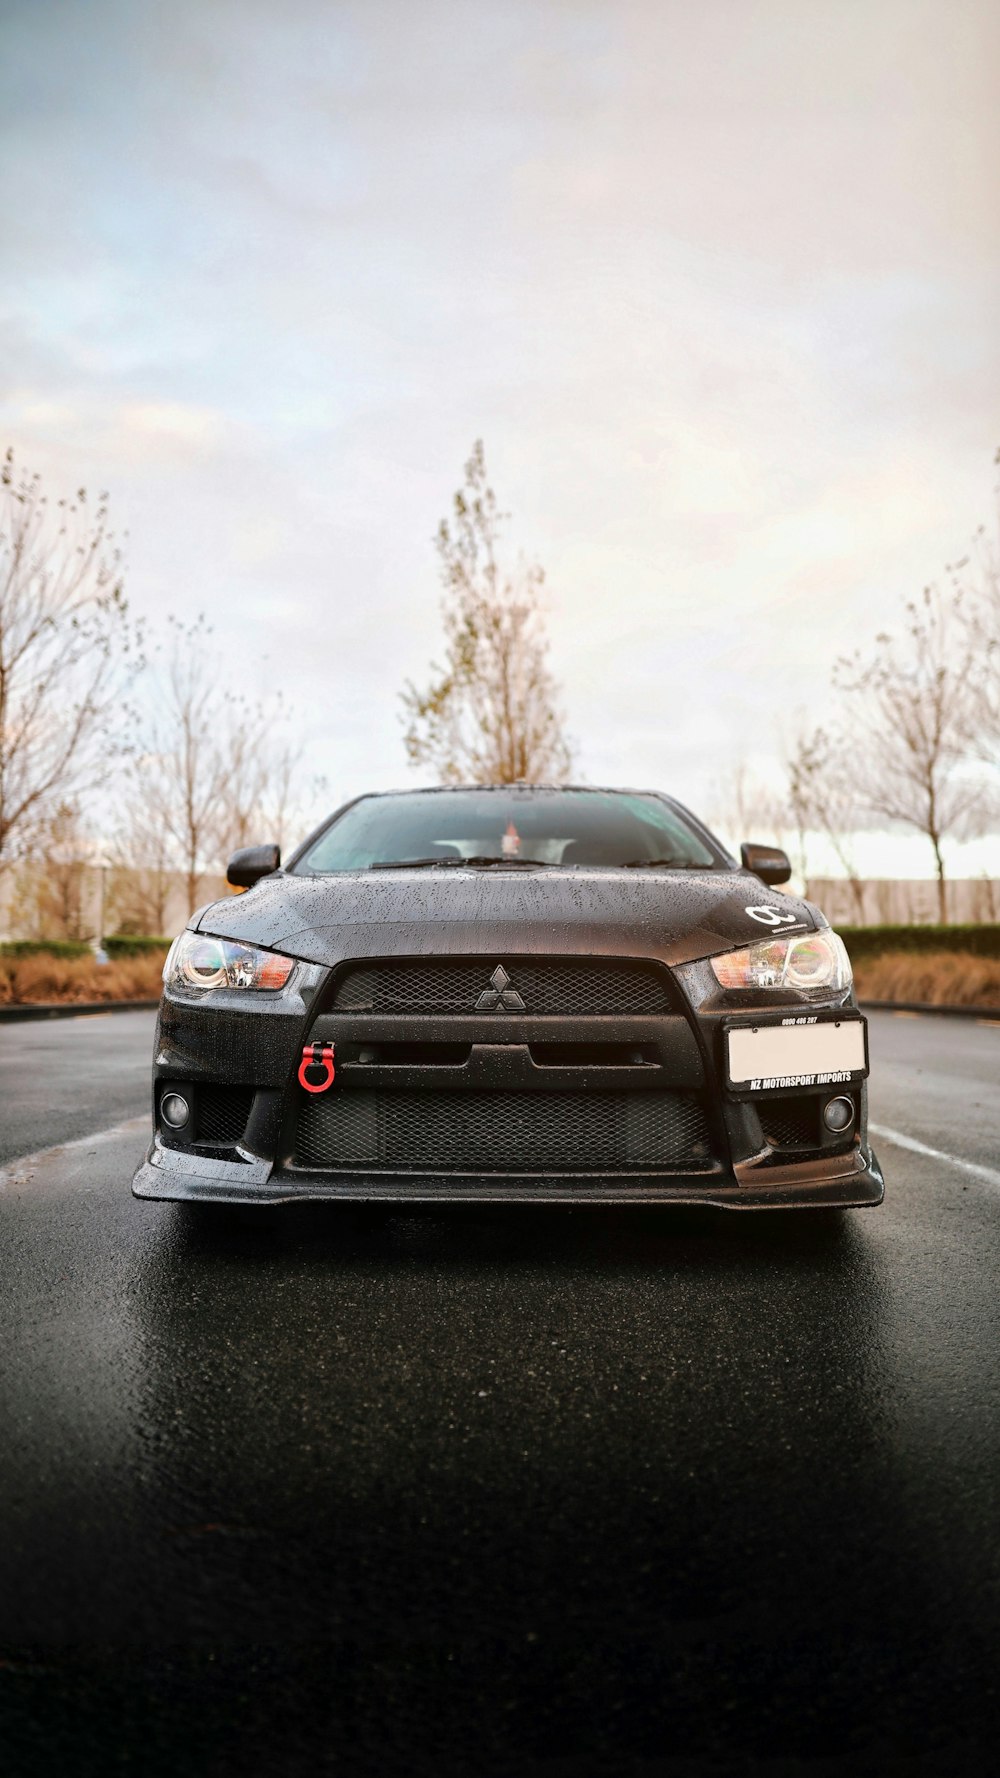 selective focus photography of black Mitsubishi car